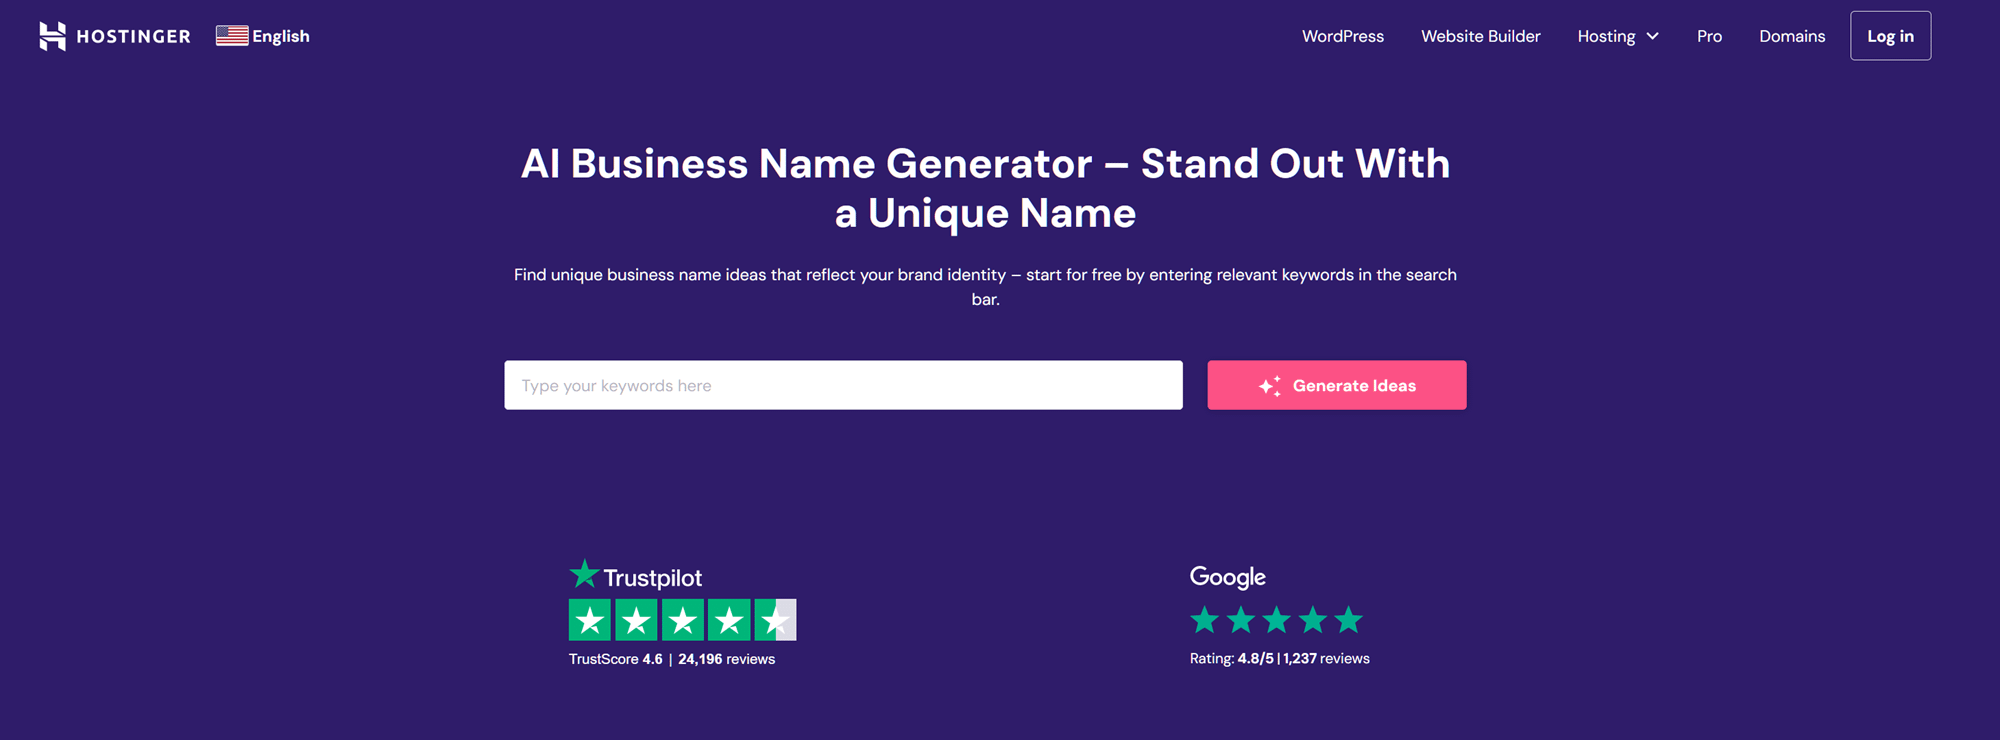 Hostinger AI business name generator tool